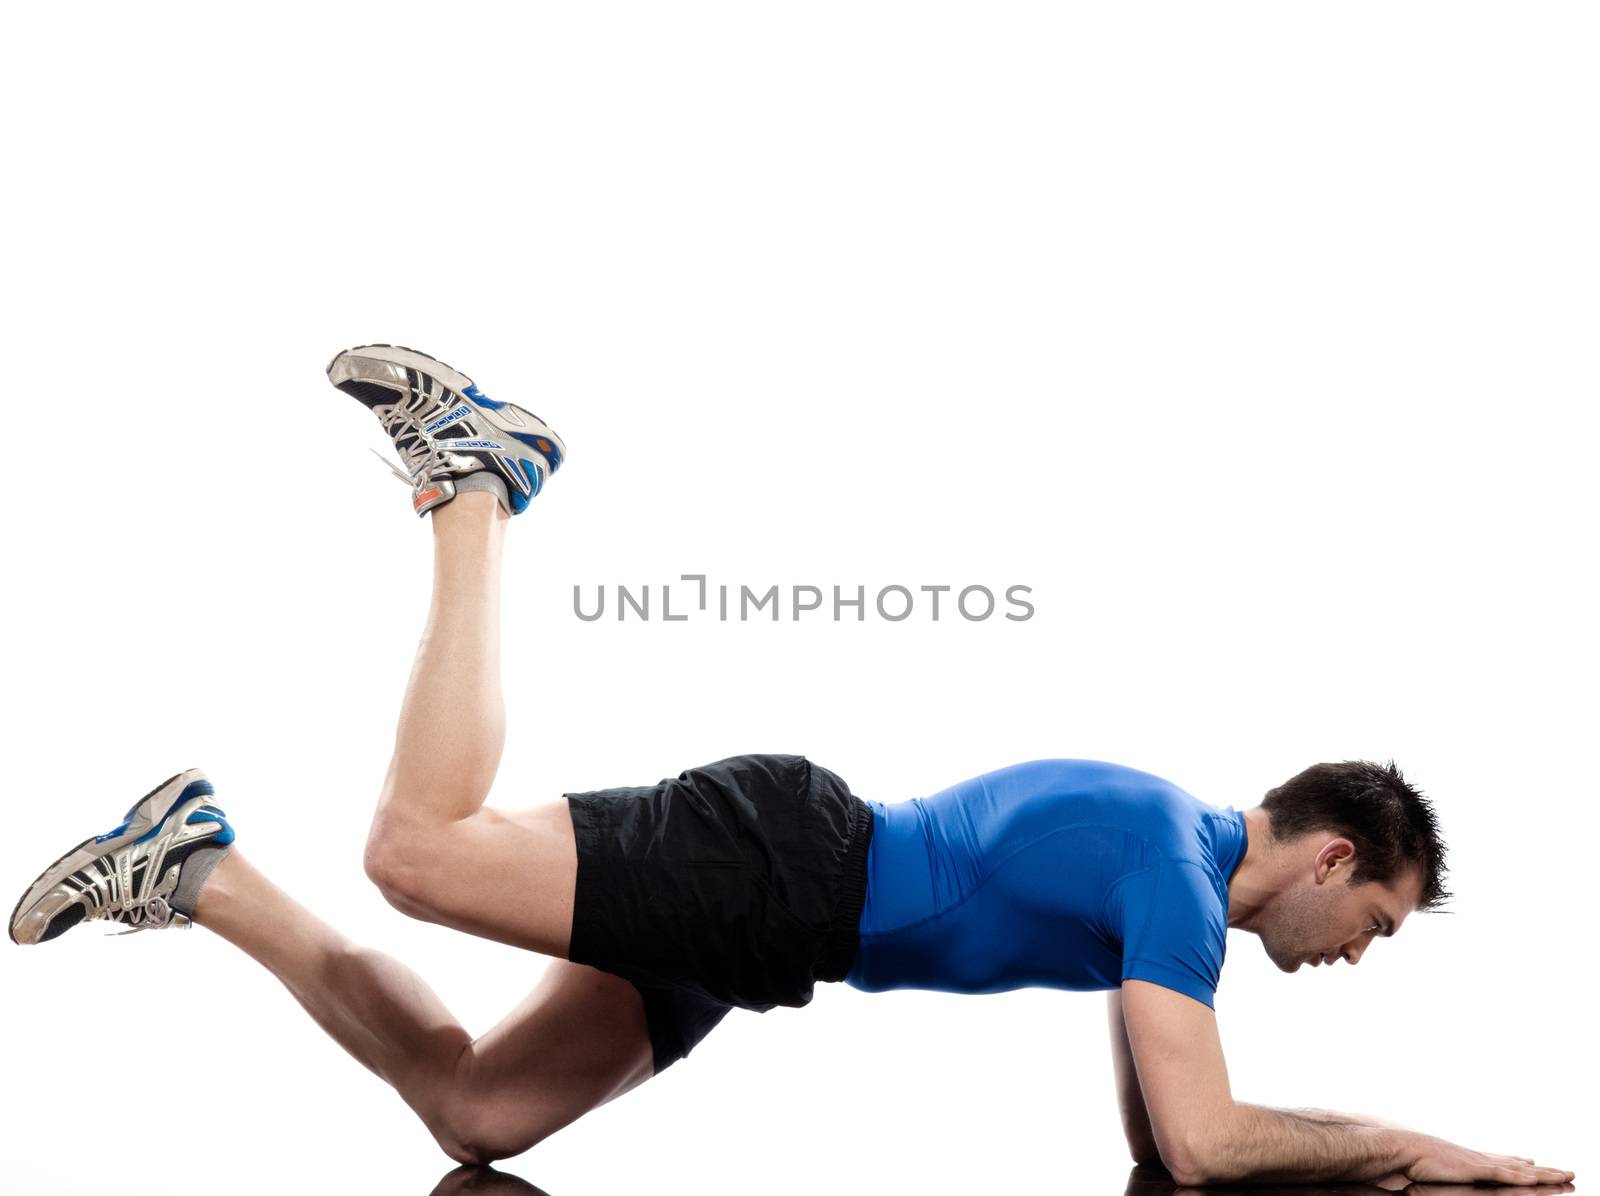 Abdominals workout posture
Plank
Bent Leg Raise by PIXSTILL